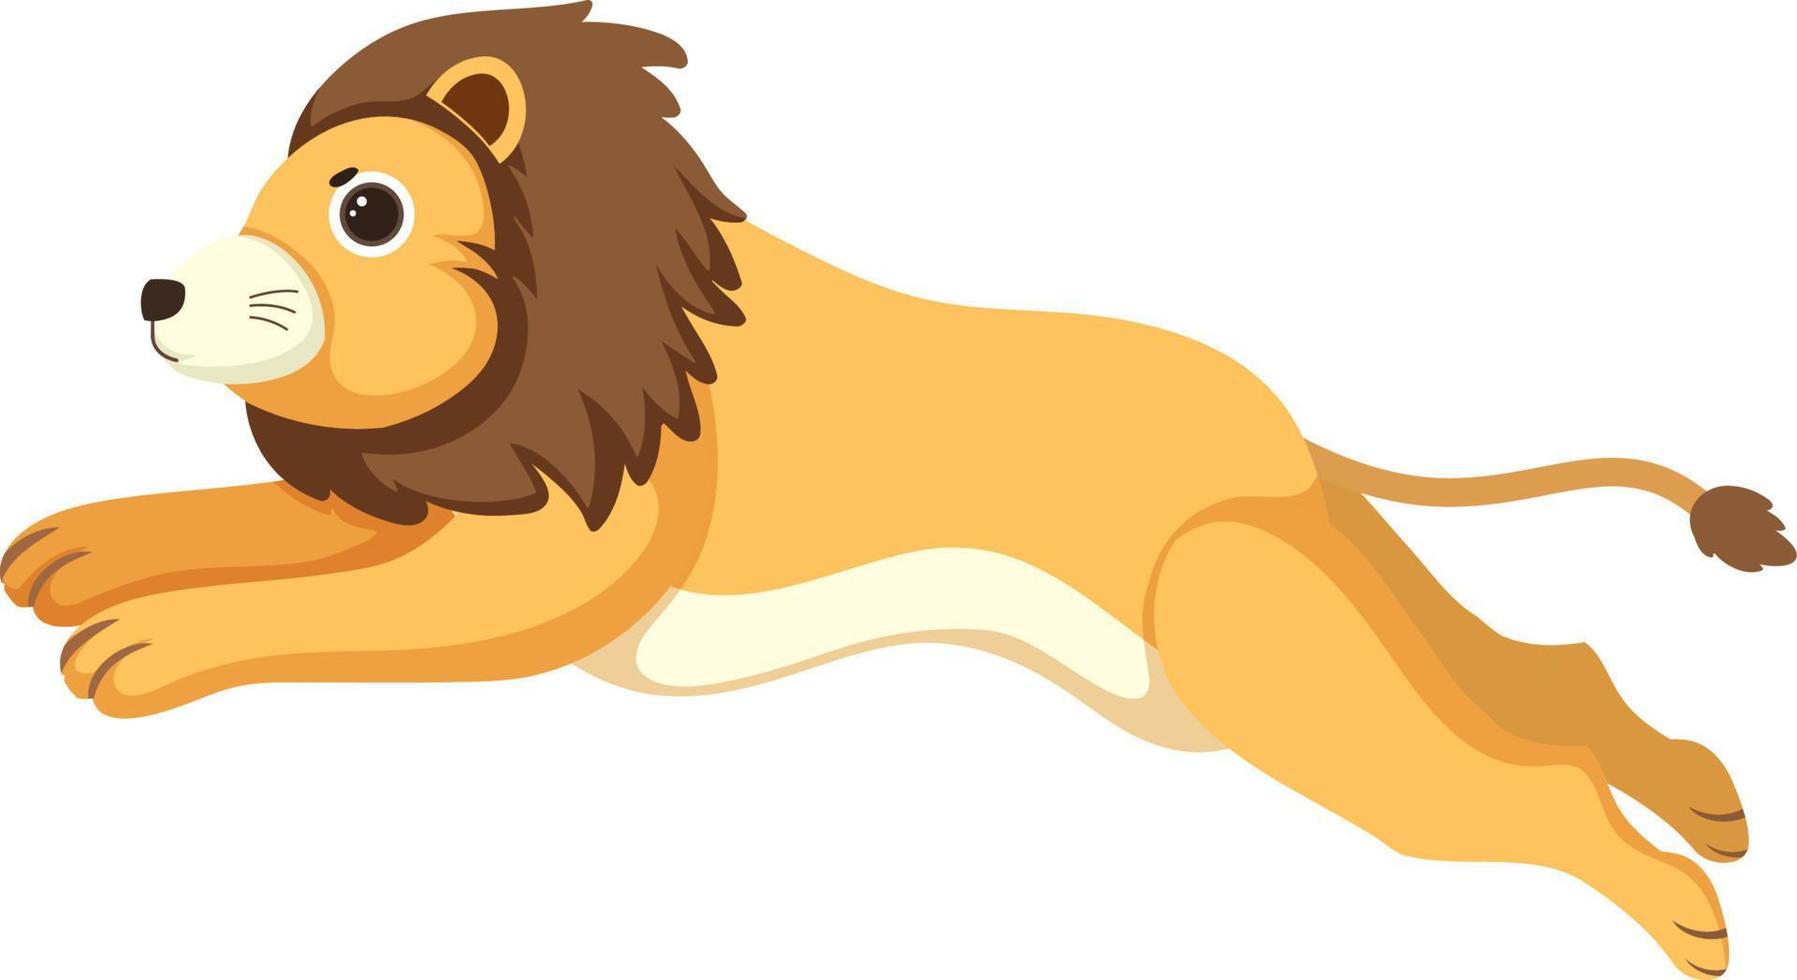 süßer Löwe im flachen Cartoon-Stil vektor